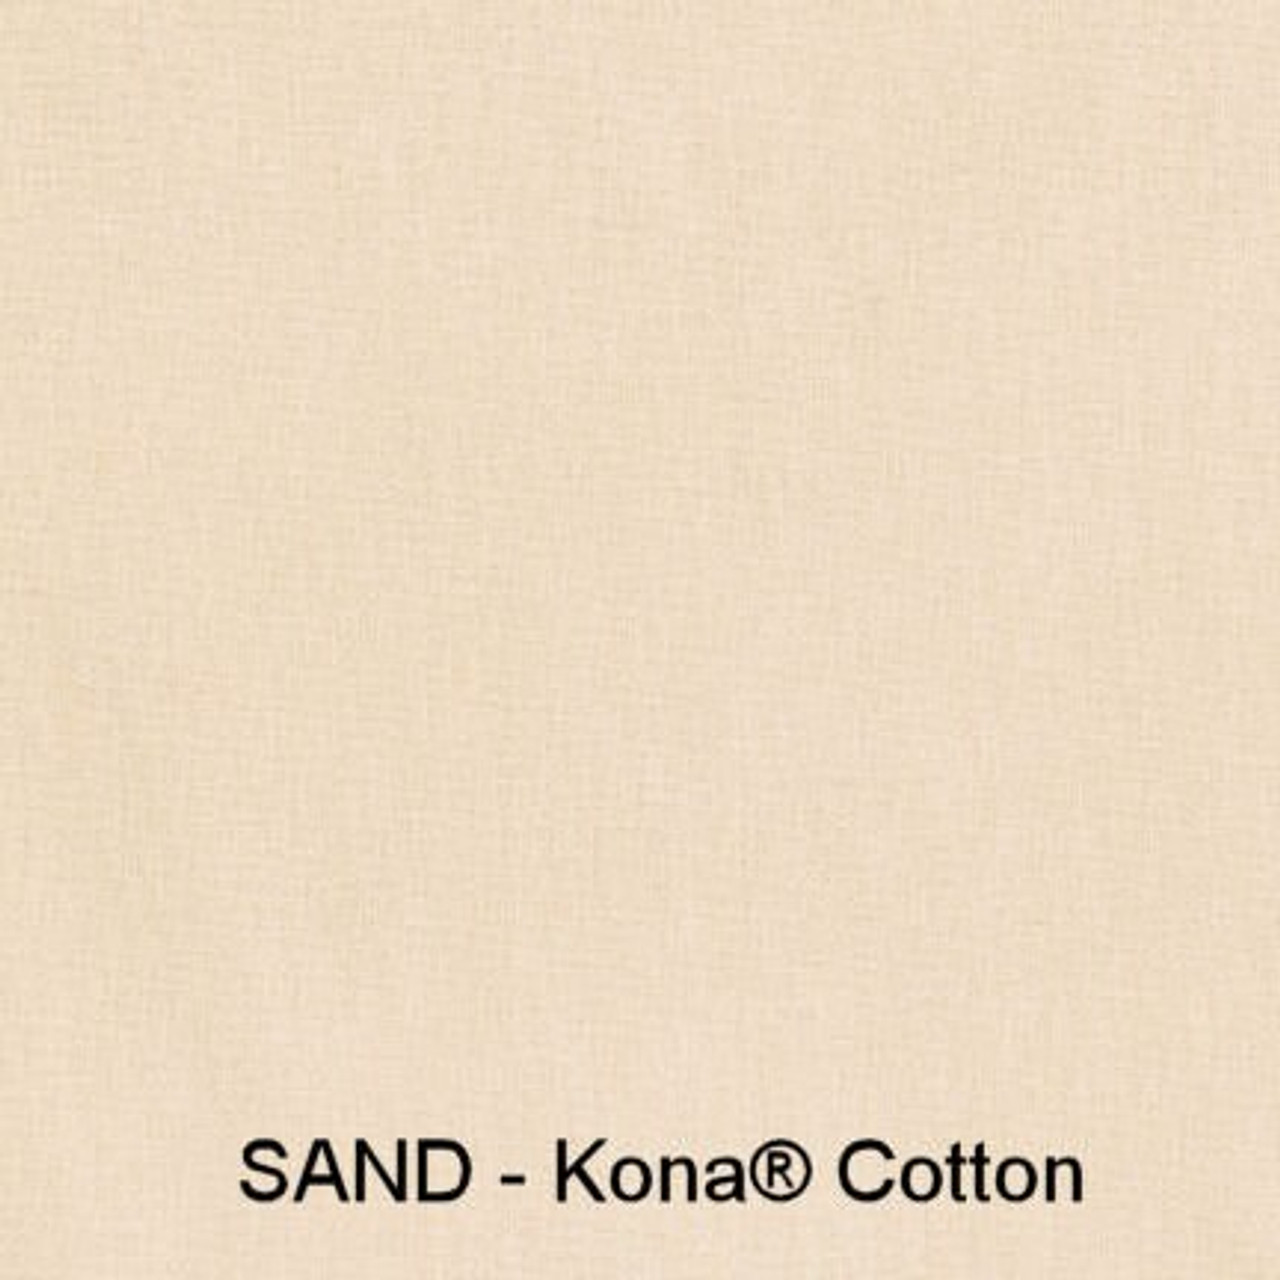 Kona Cotton Solids by Robert Kaufman